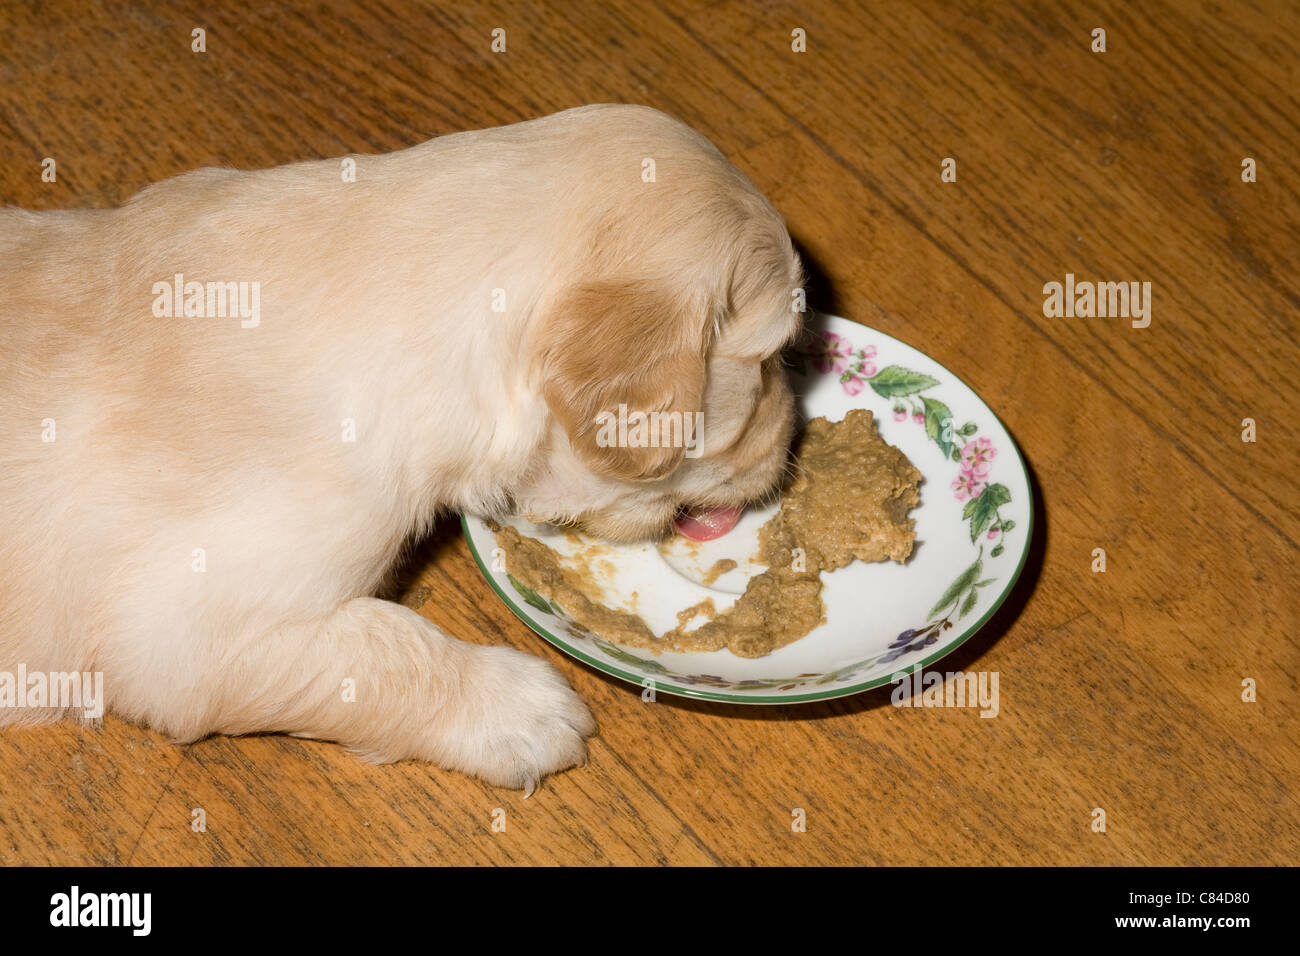 Royal canin welpenfutter -Fotos und -Bildmaterial in hoher Auflösung – Alamy